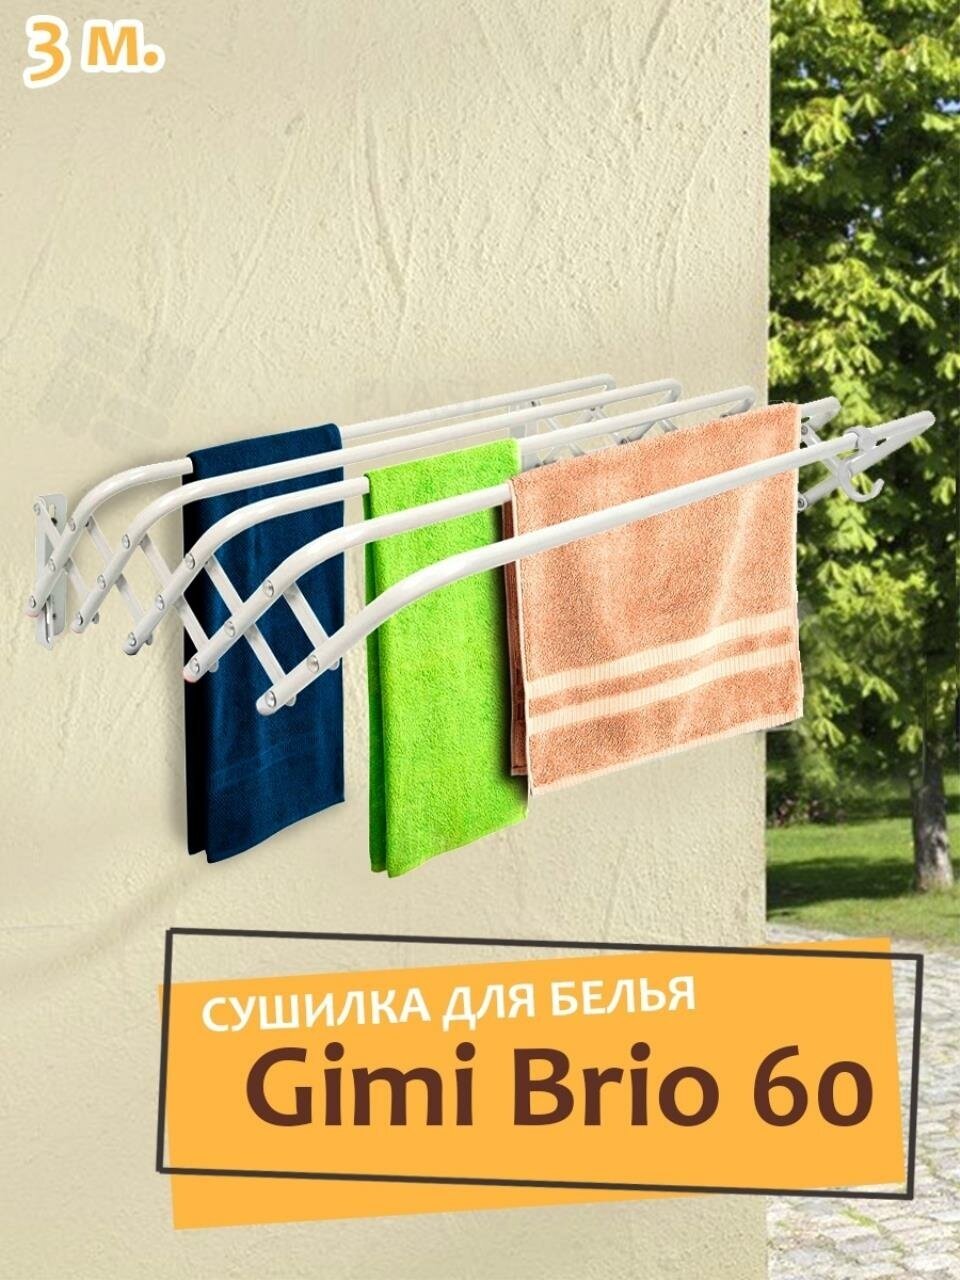 Сушилка Gimi Brio 60 super it - фото №5